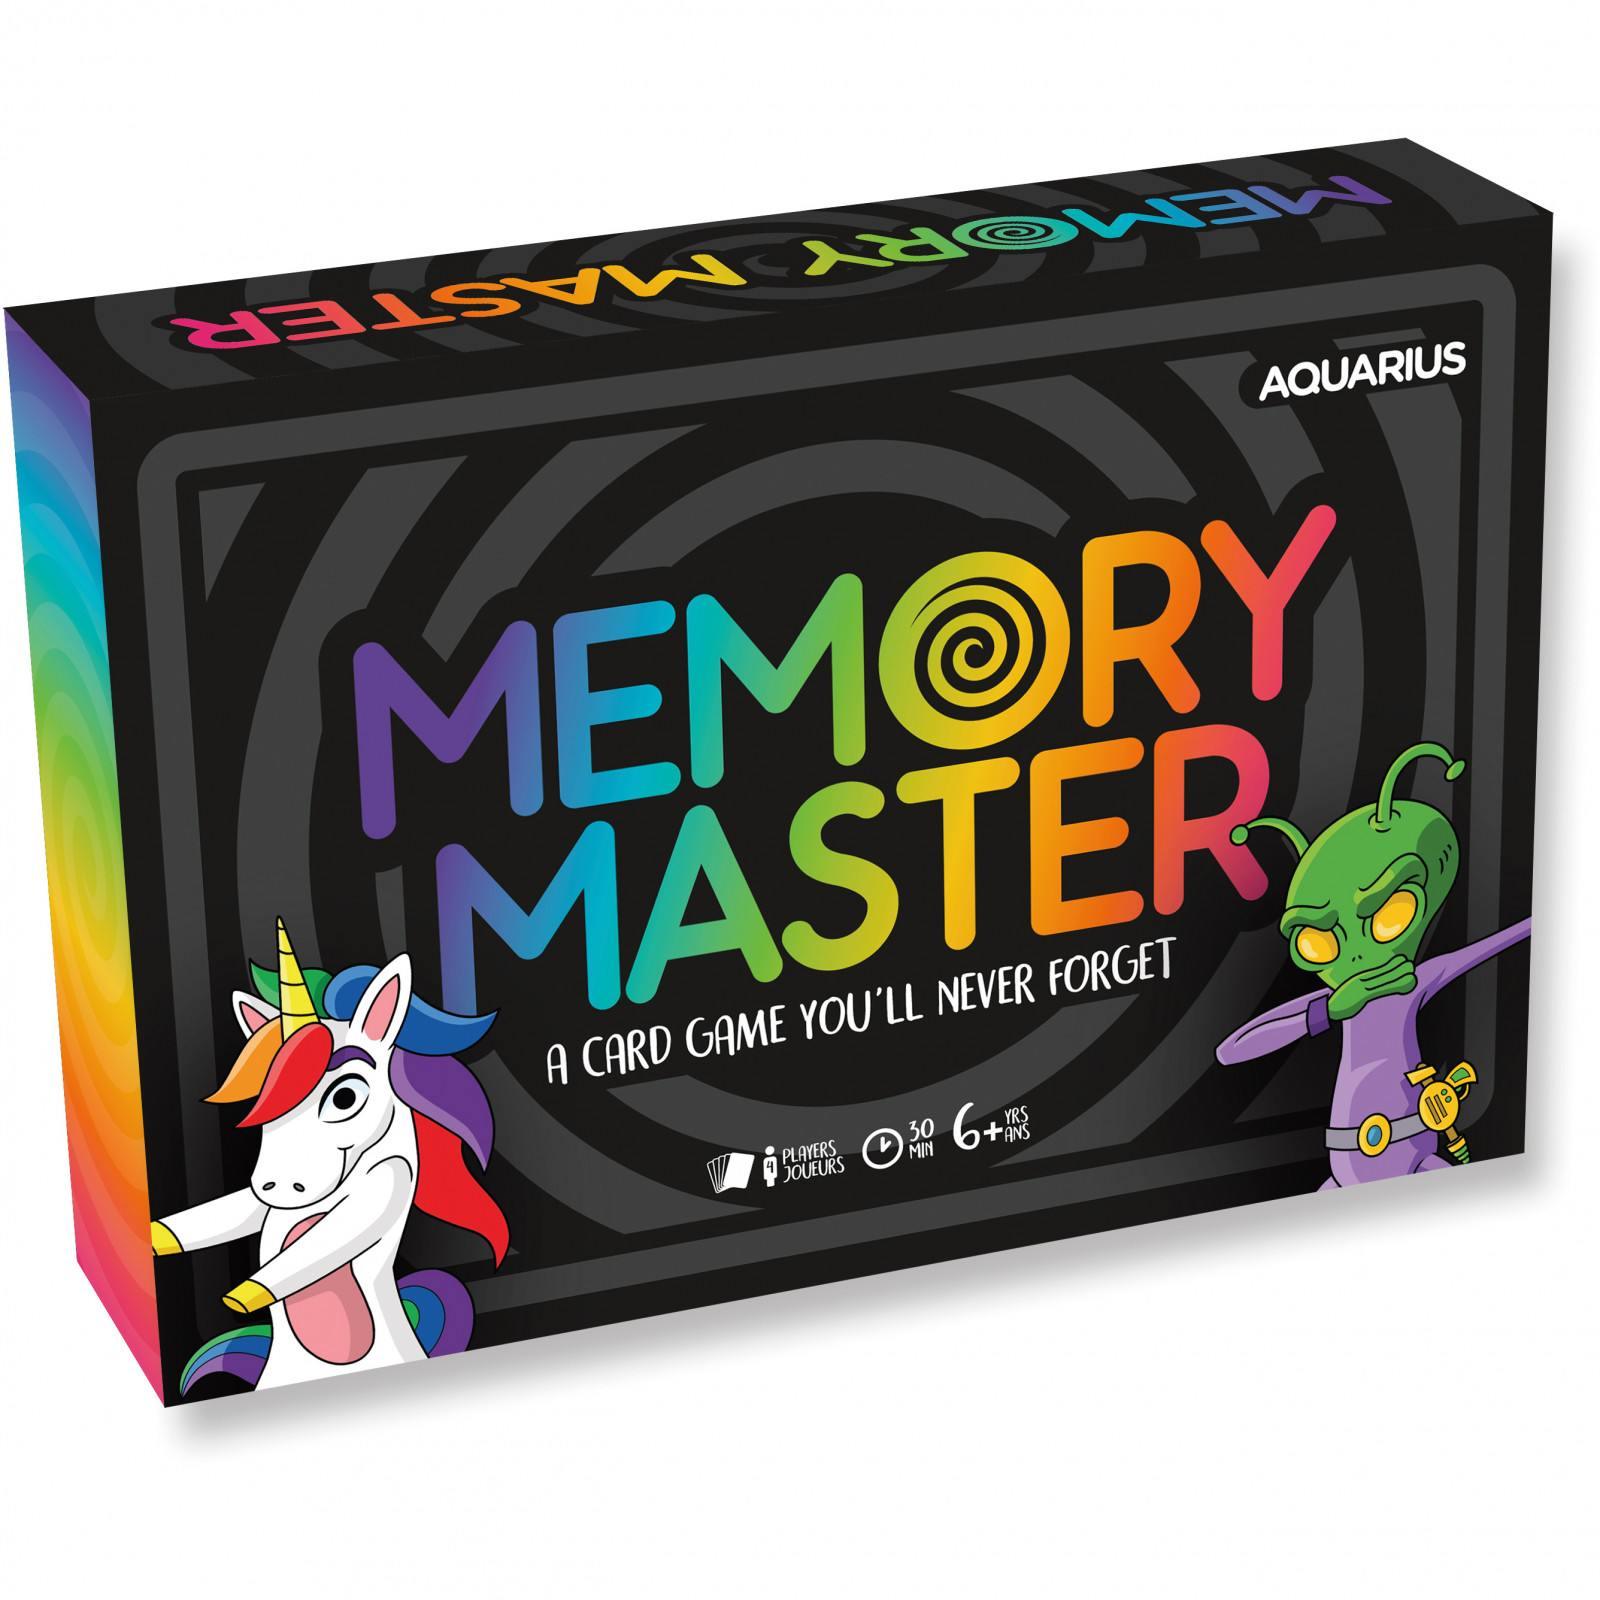 VR-84705 Memory Master Card Game Original Edition - Aquarius - Titan Pop Culture